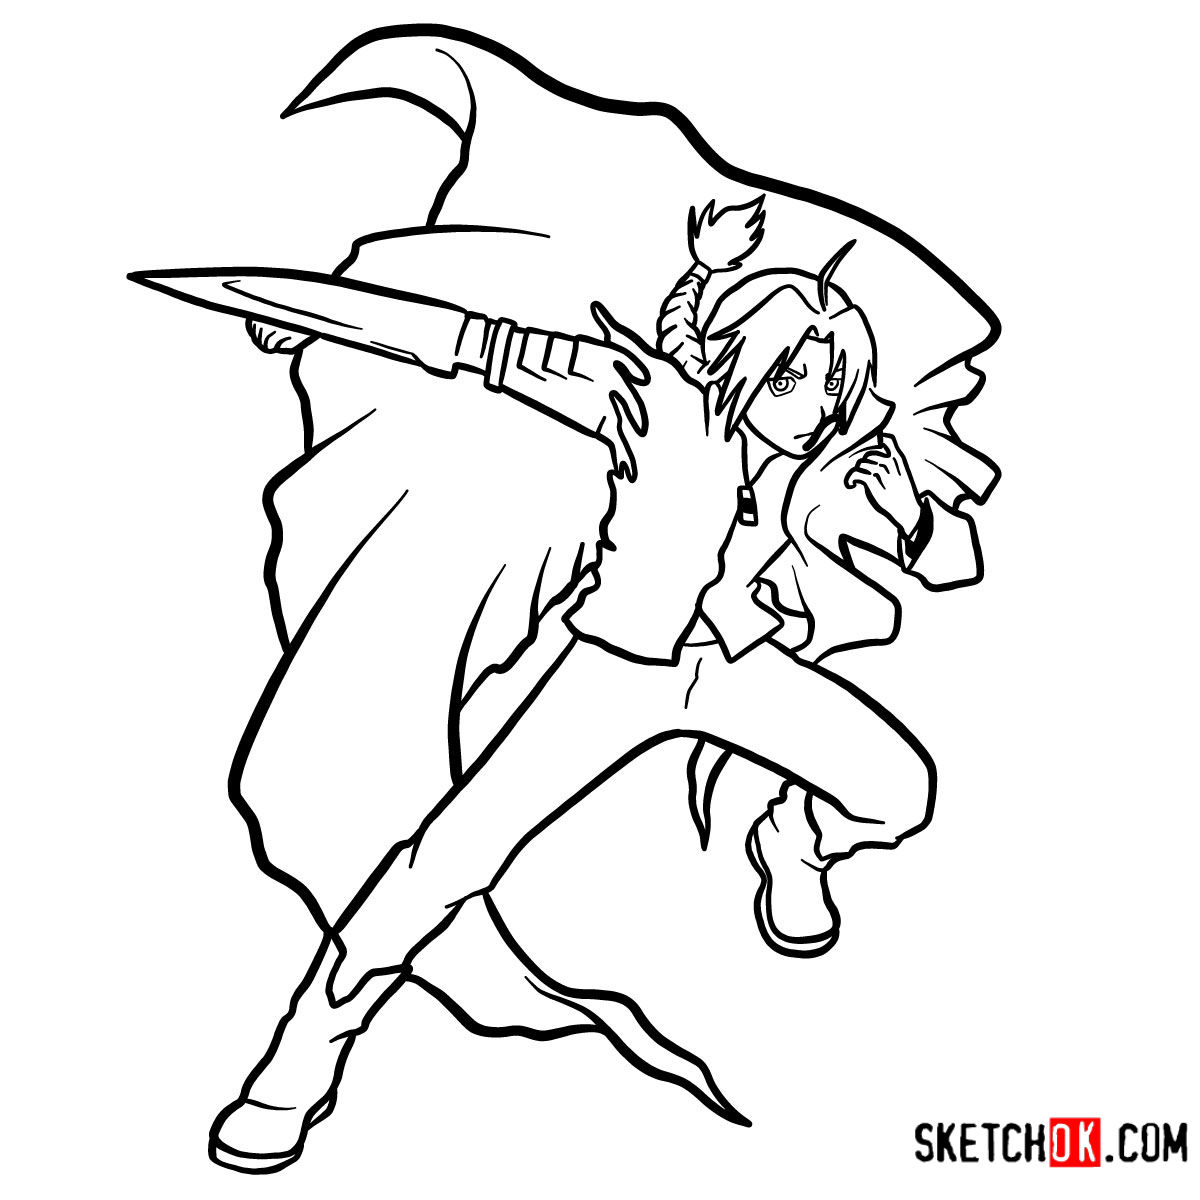 How to draw Edward Elric in a fight | Fullmetal Alchemist